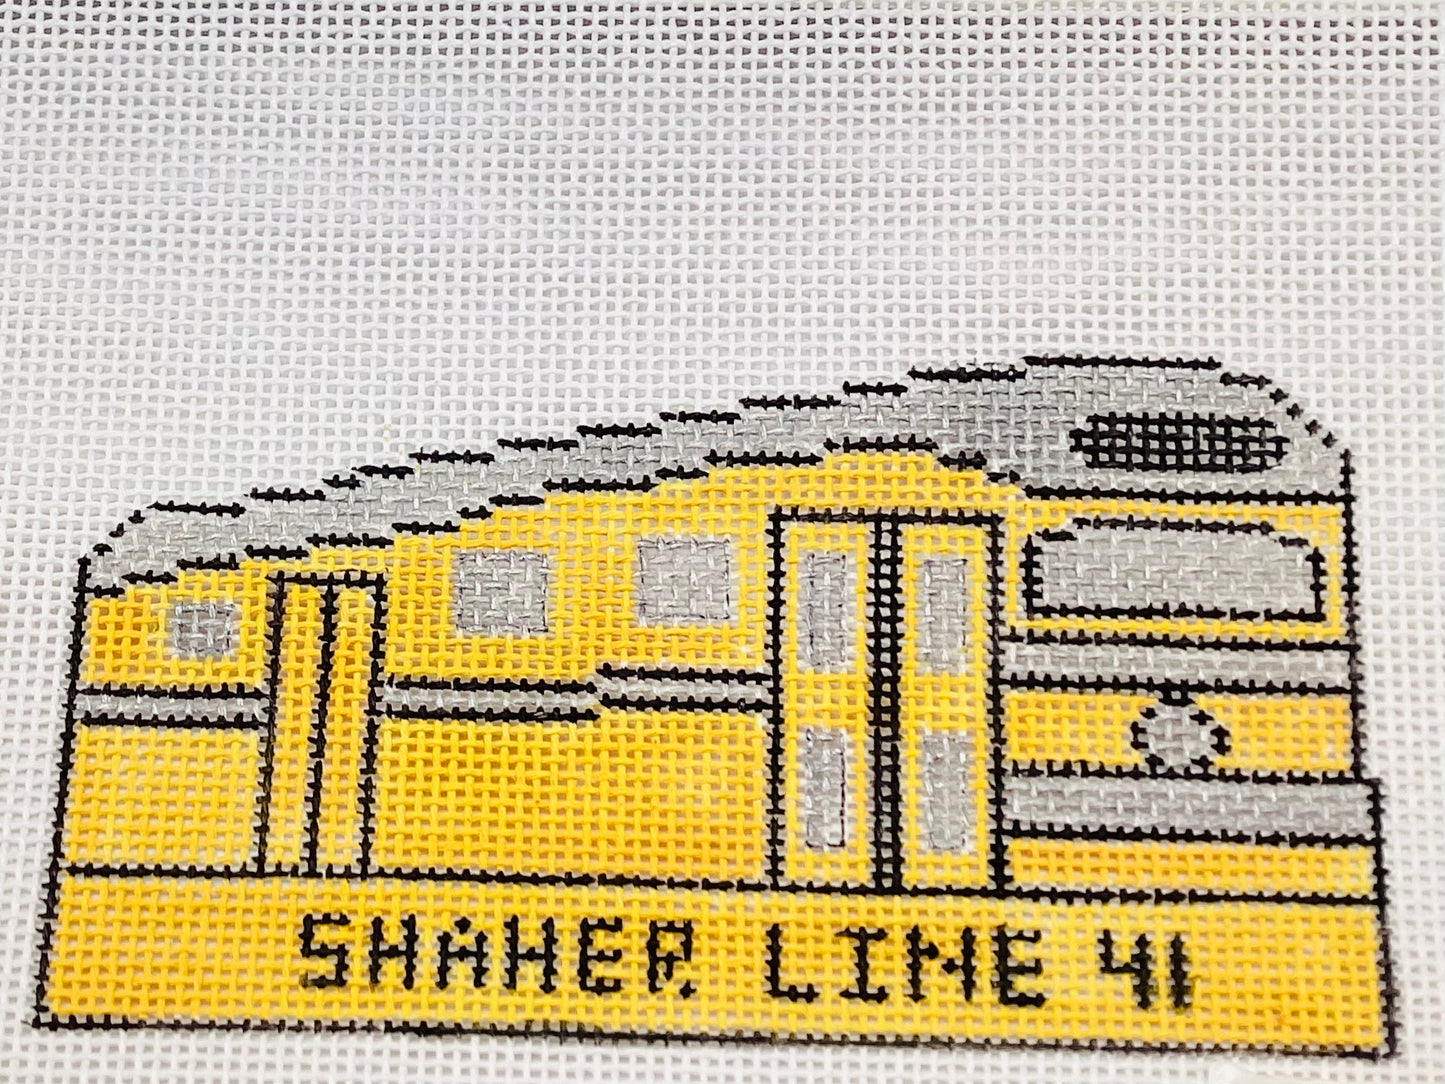 Shaker Line Train